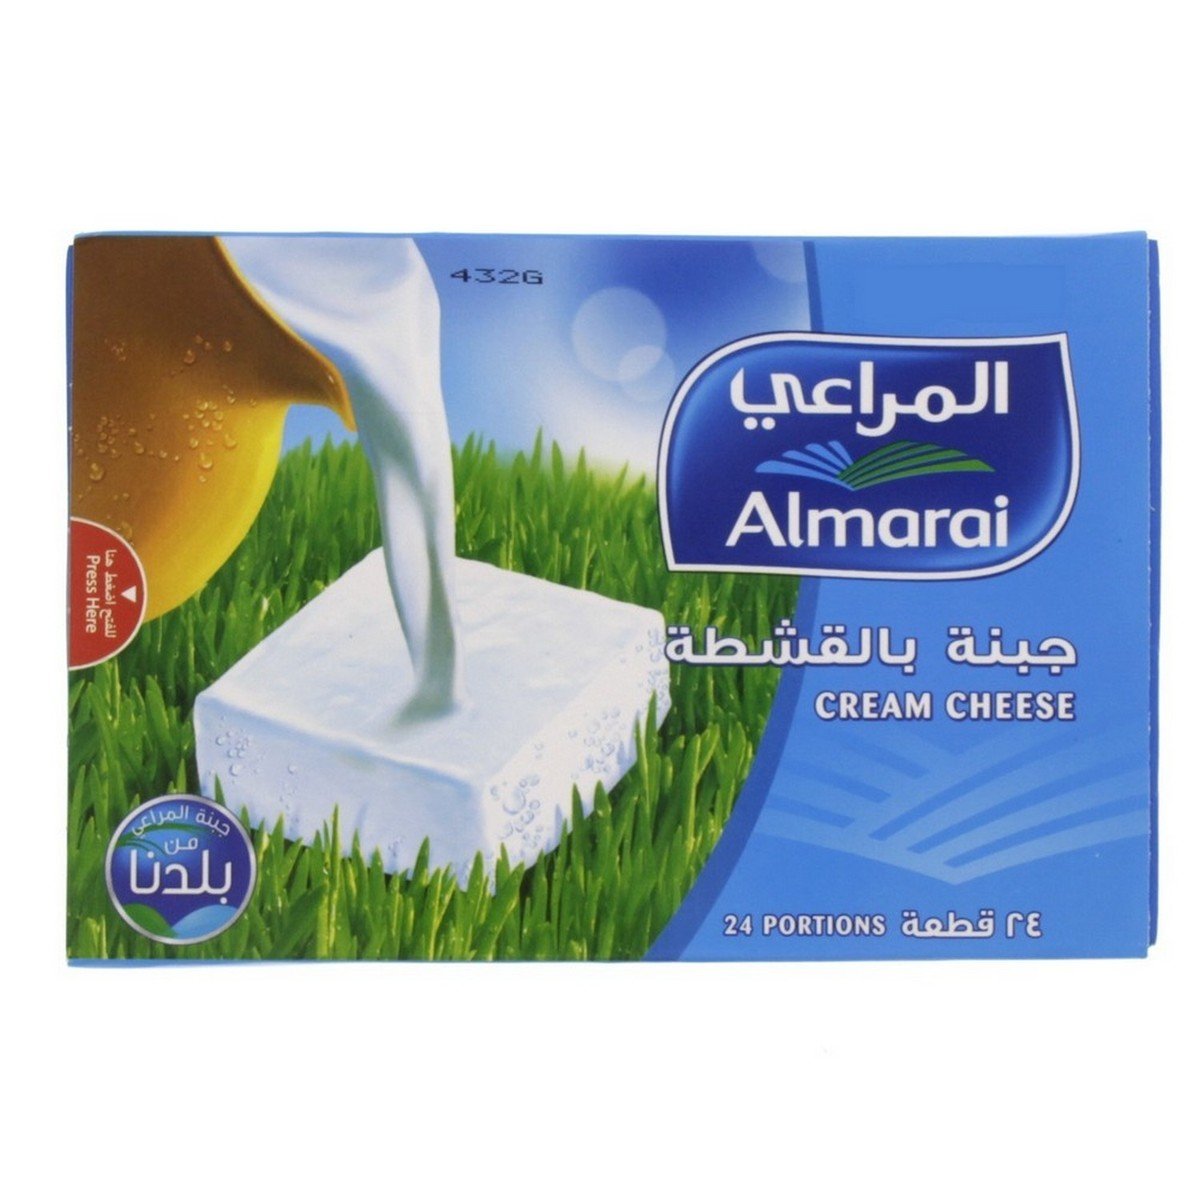 Buy Almarai Cream Cheese 432 g Online at Best Price | Portion Cheese | Lulu KSA in Saudi Arabia